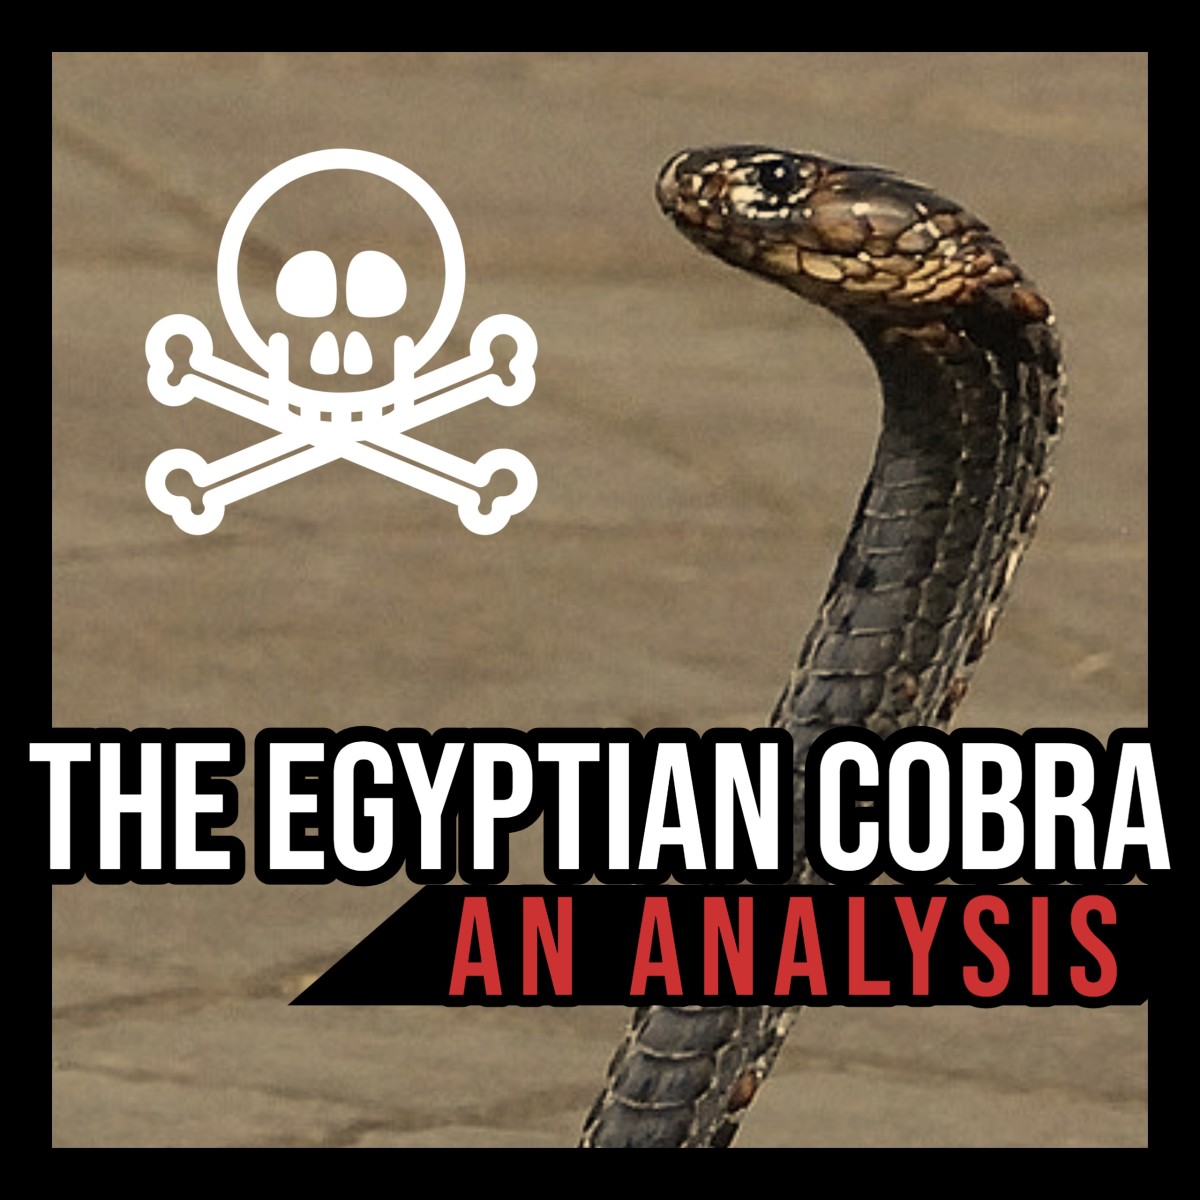 The Egyptian cobra: an analysis